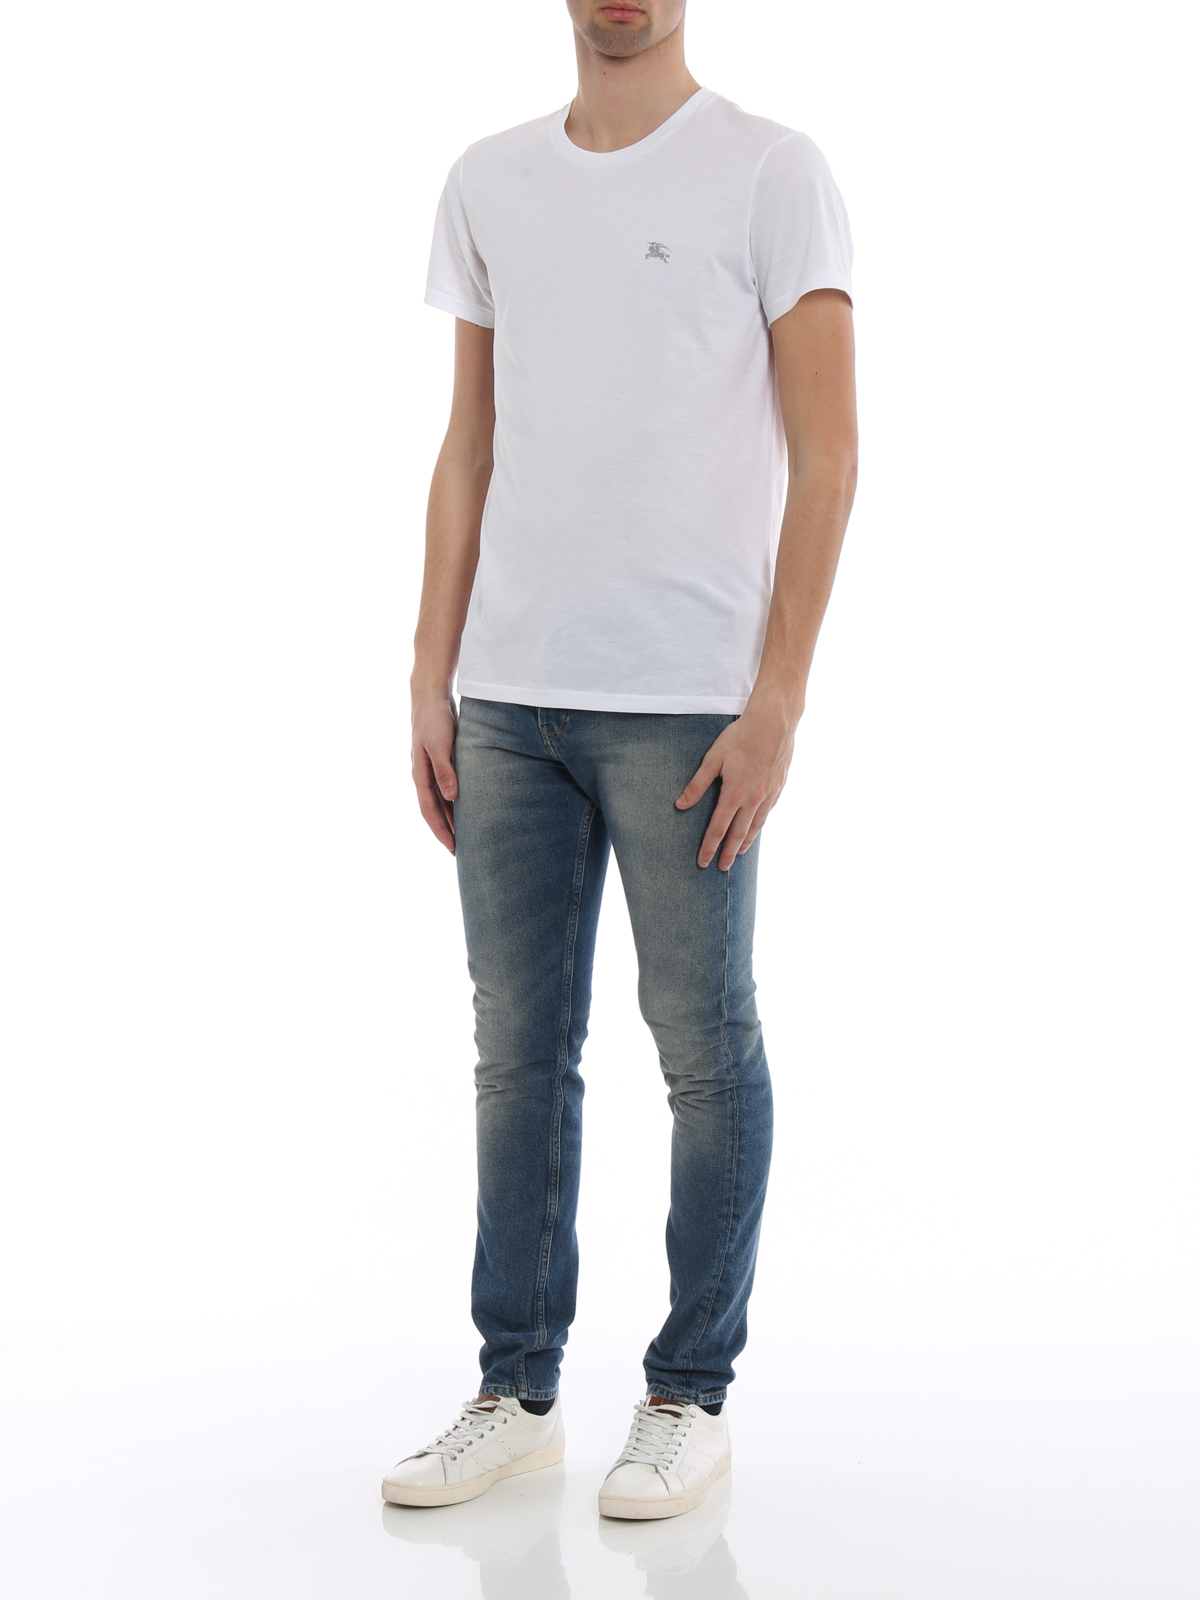 T-shirts Burberry - Joeforth white jersey T-shirt - 4061819 